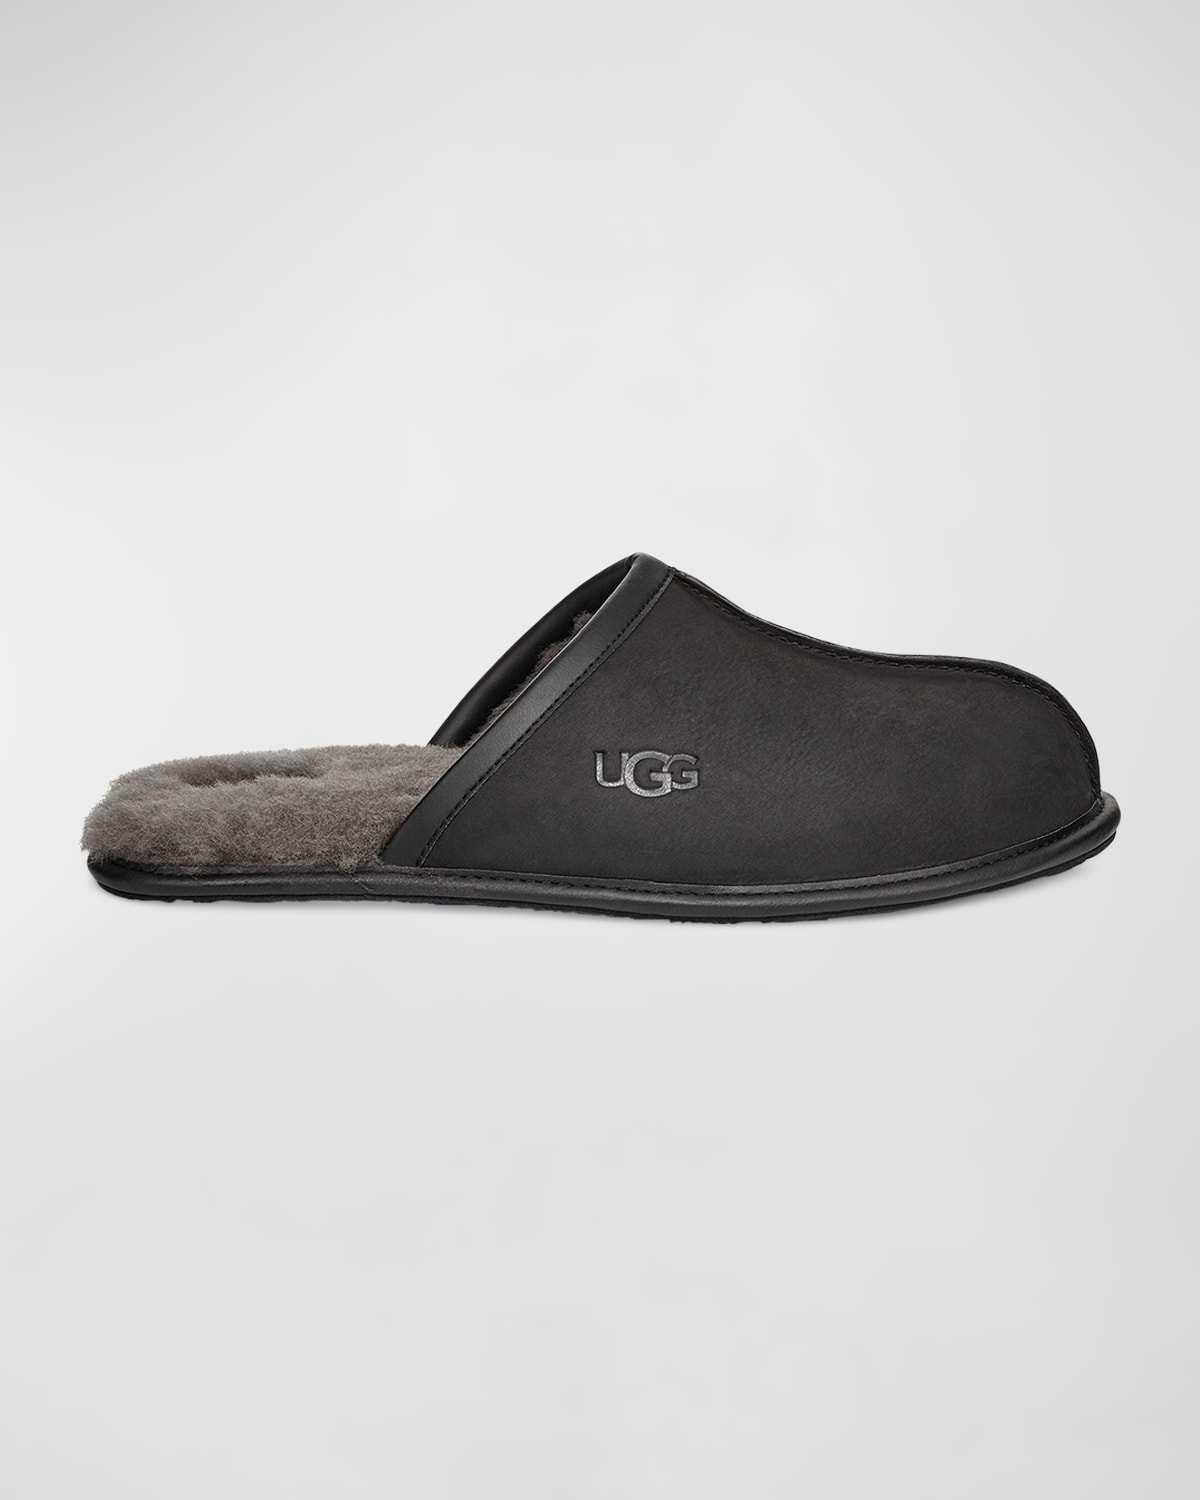 UGGMen's Scuff Leather Mule Slippers w/ Wool Lining